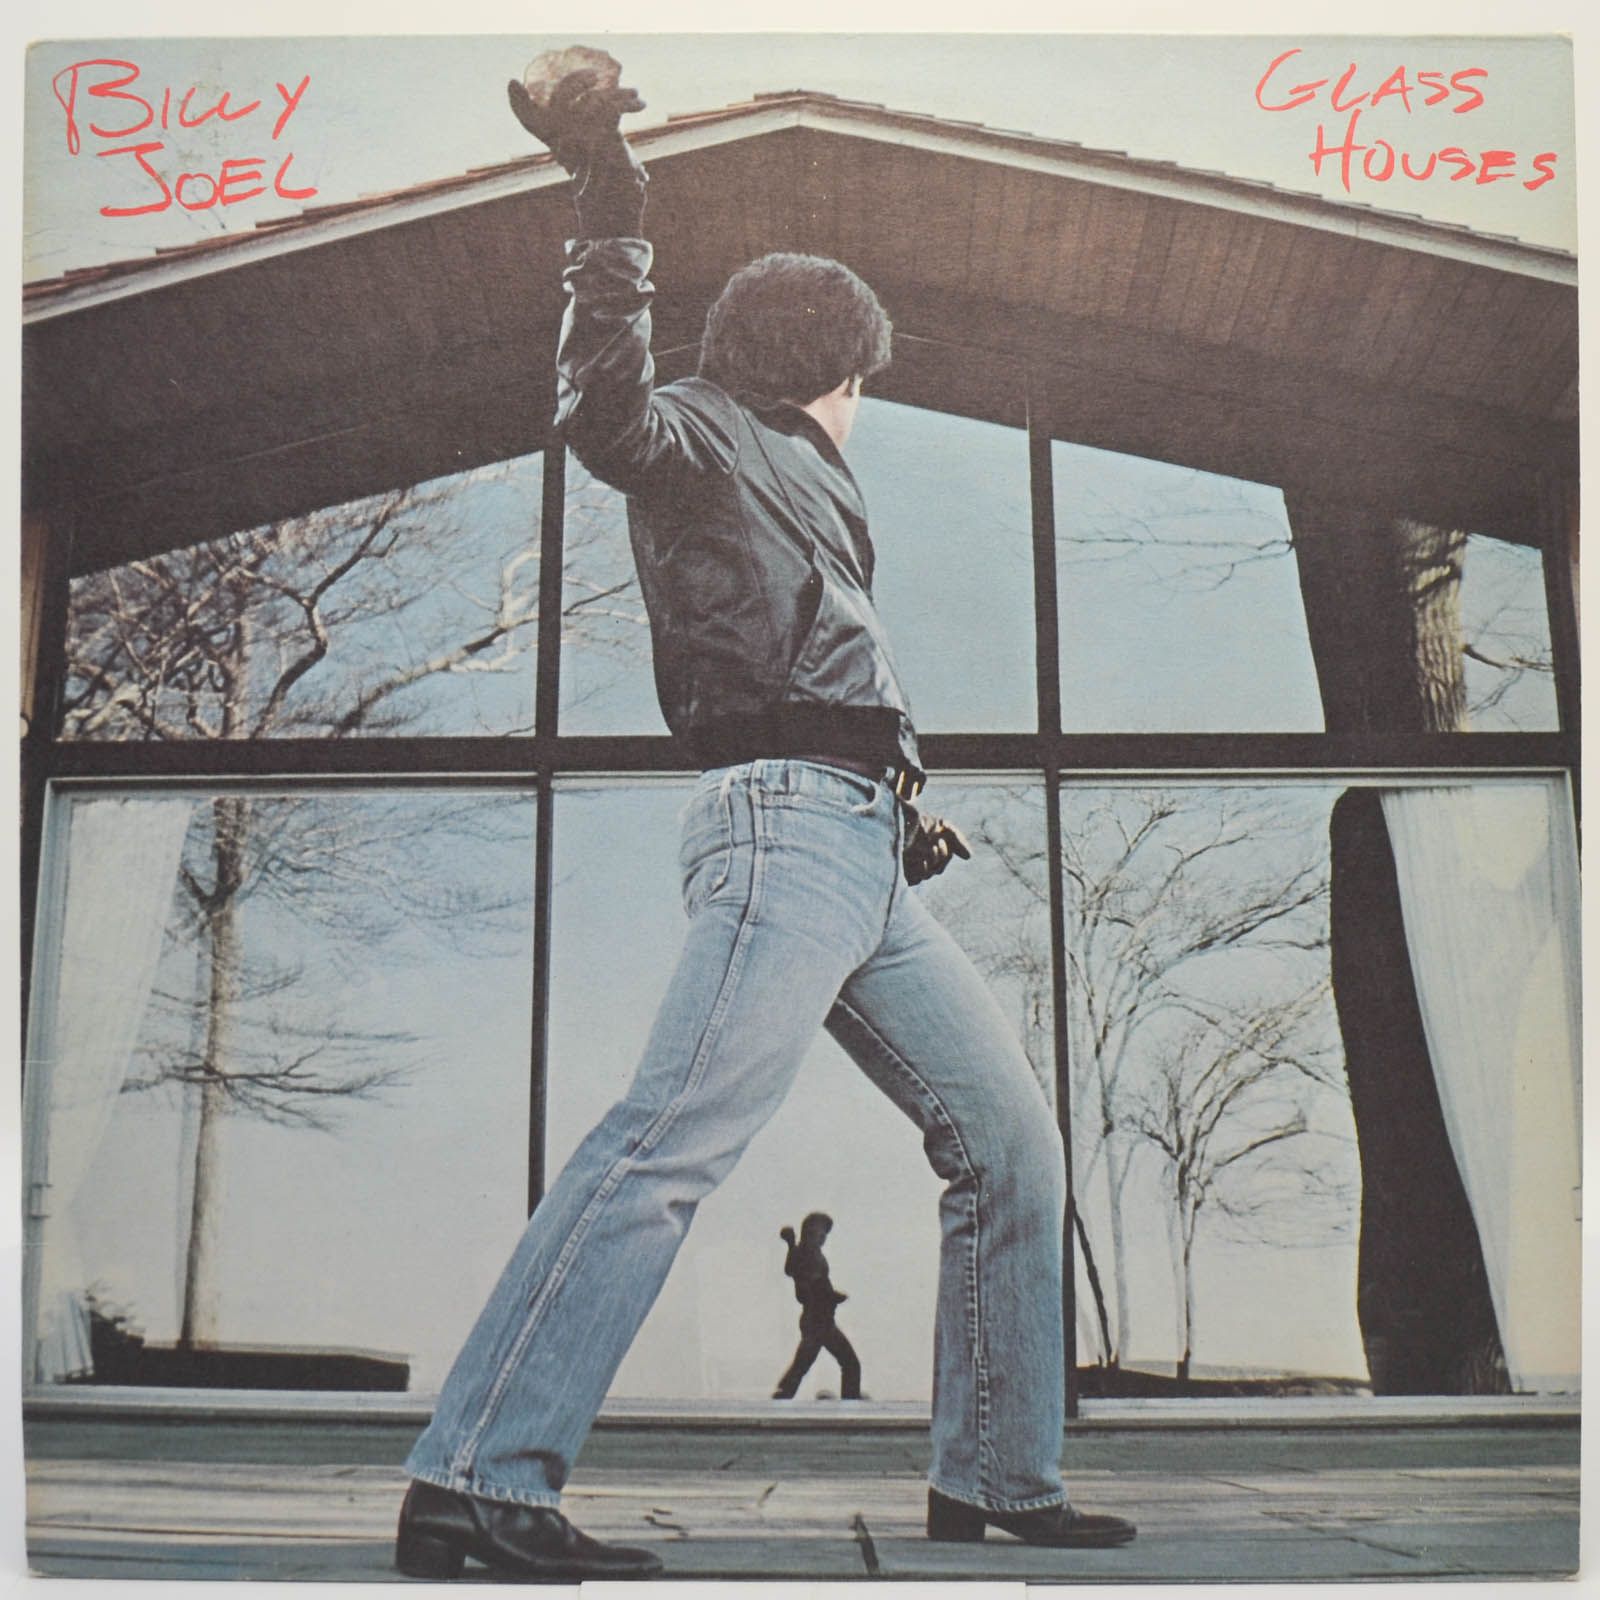 Billy Joel — Glass Houses, 1980